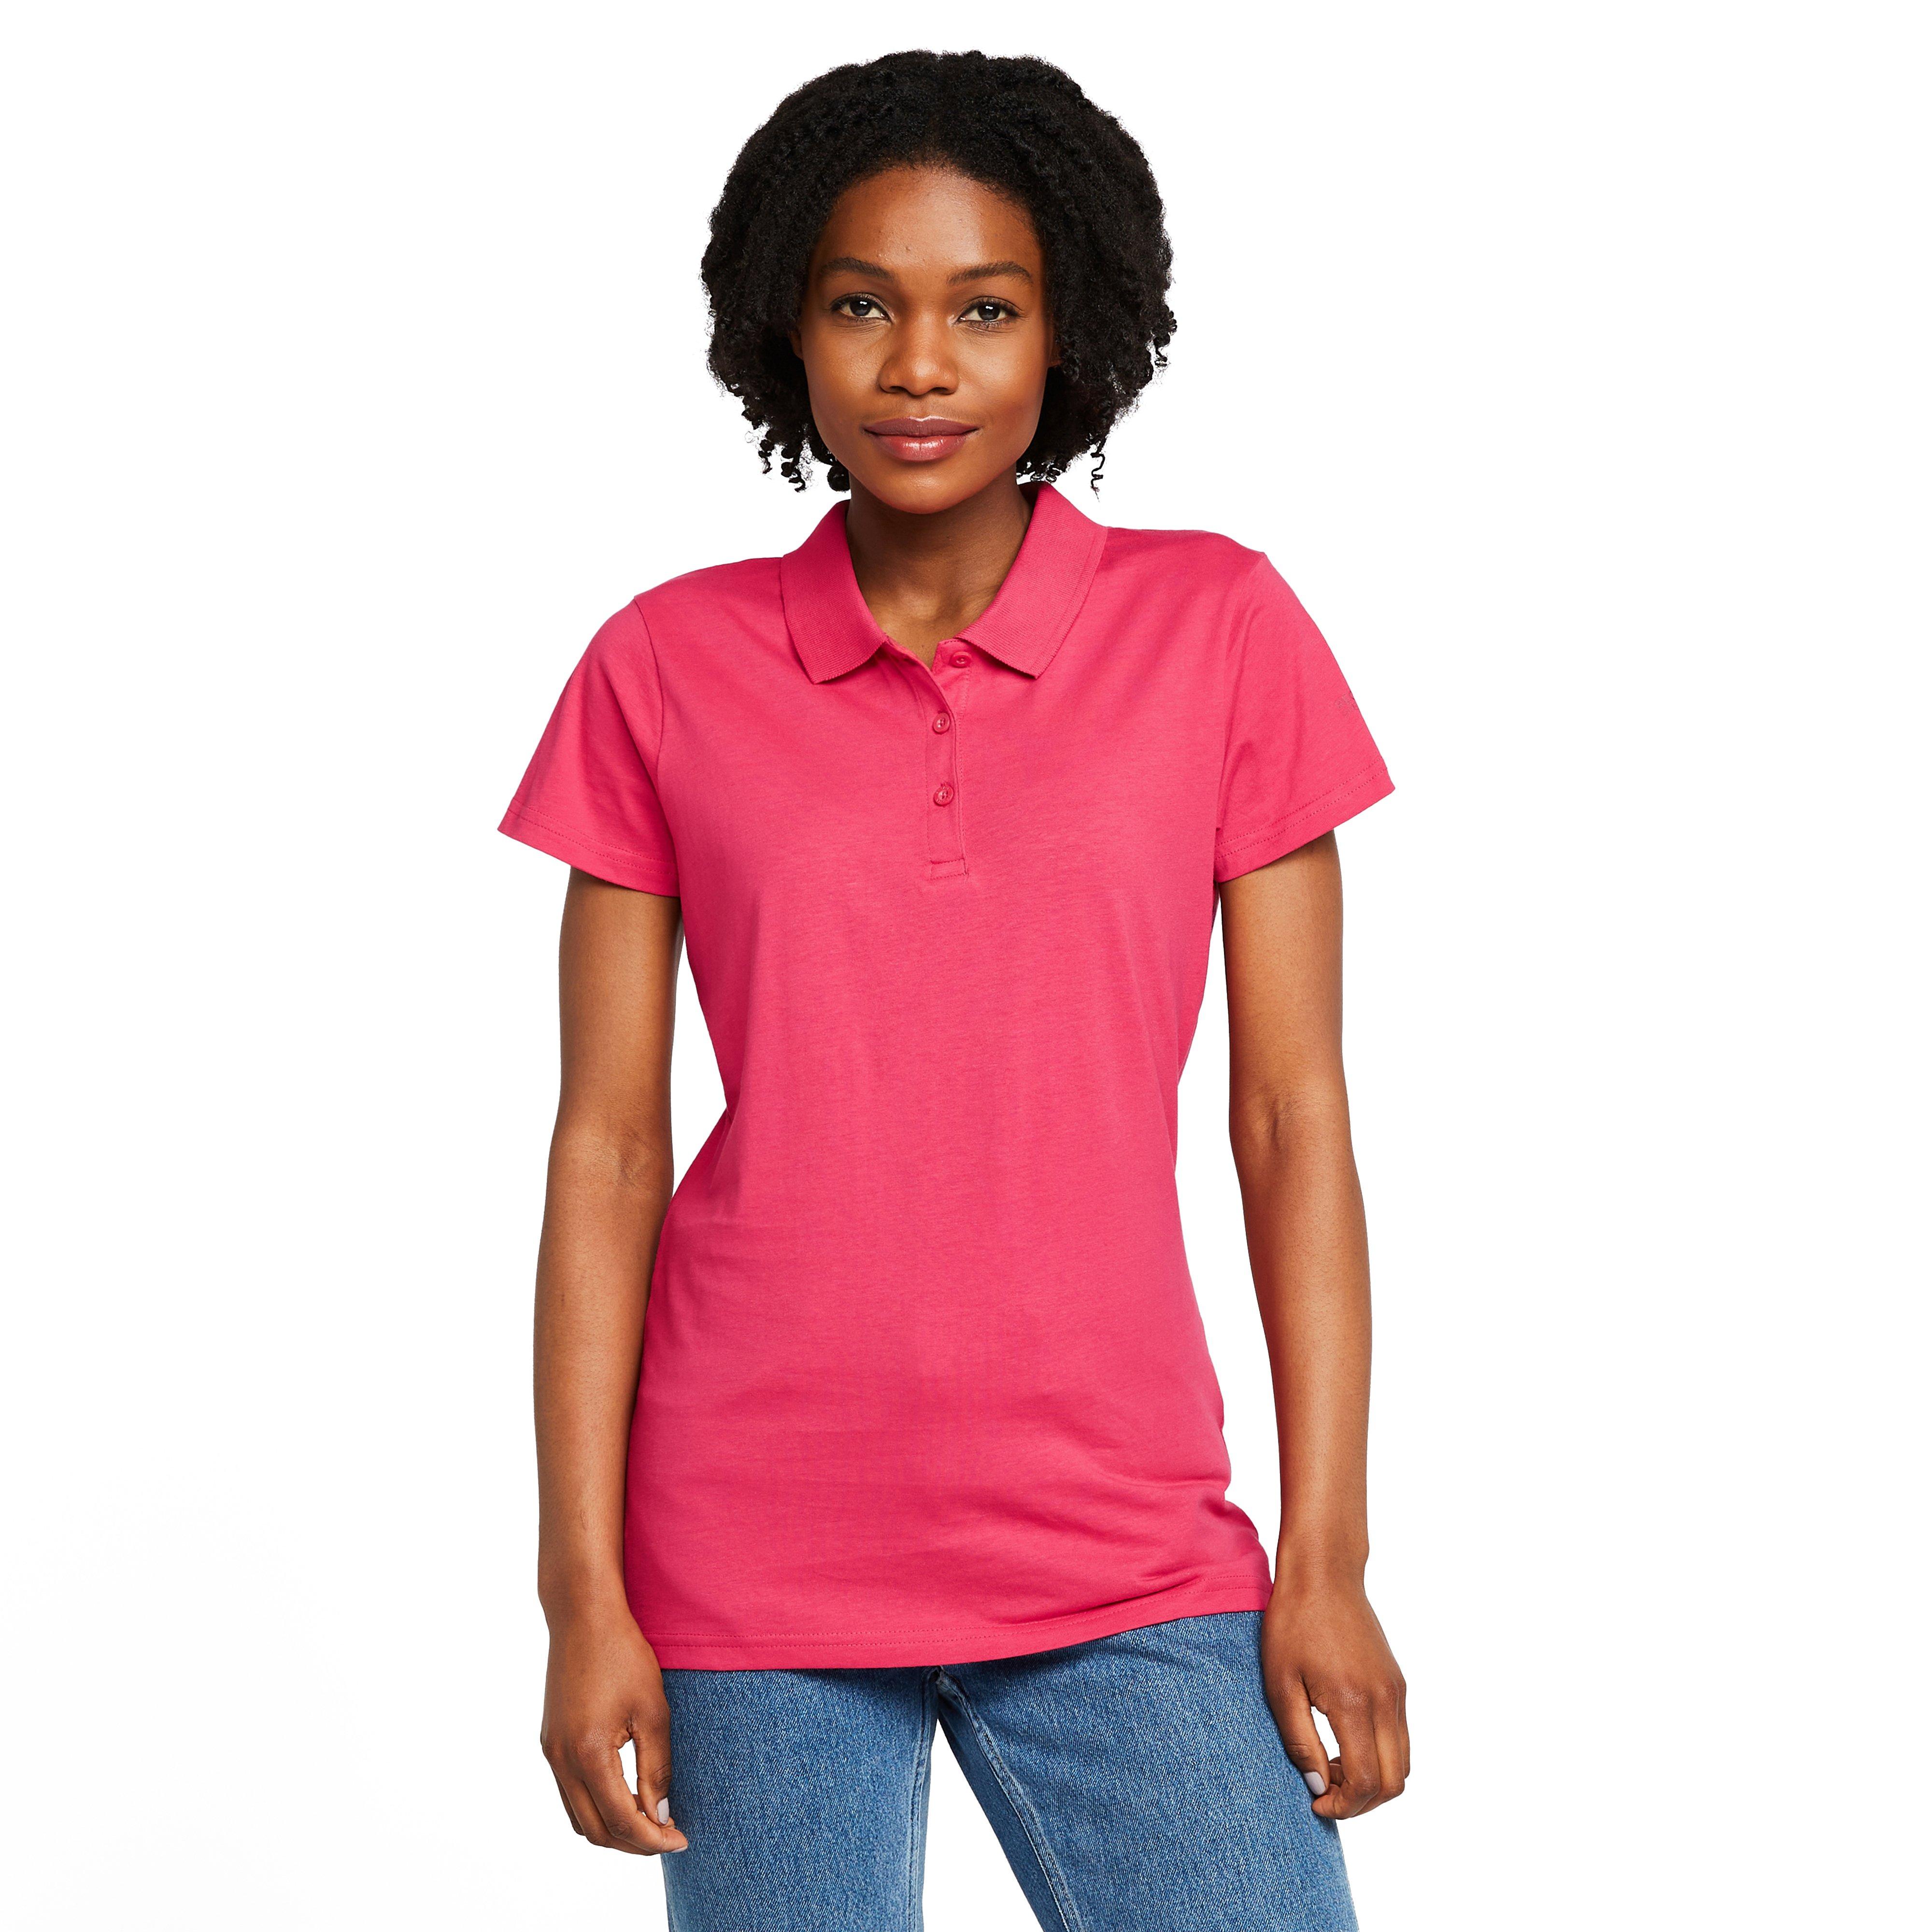 Womens Sinton Polo Shirt Rethink Pink